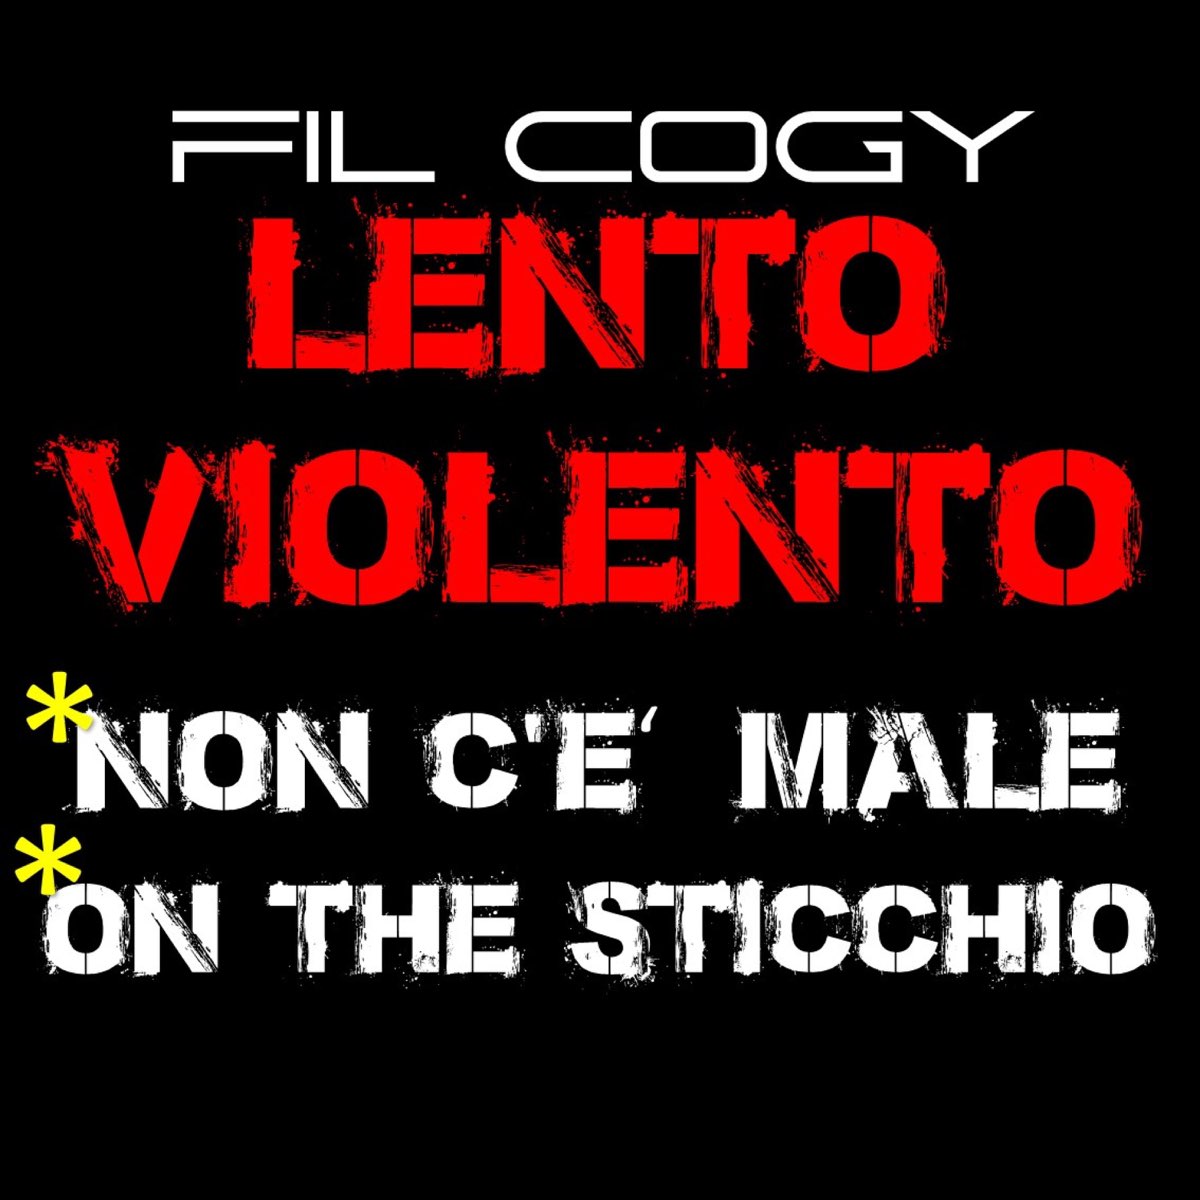 Lento Violento - Single - Album by Fil Cogy - Apple Music